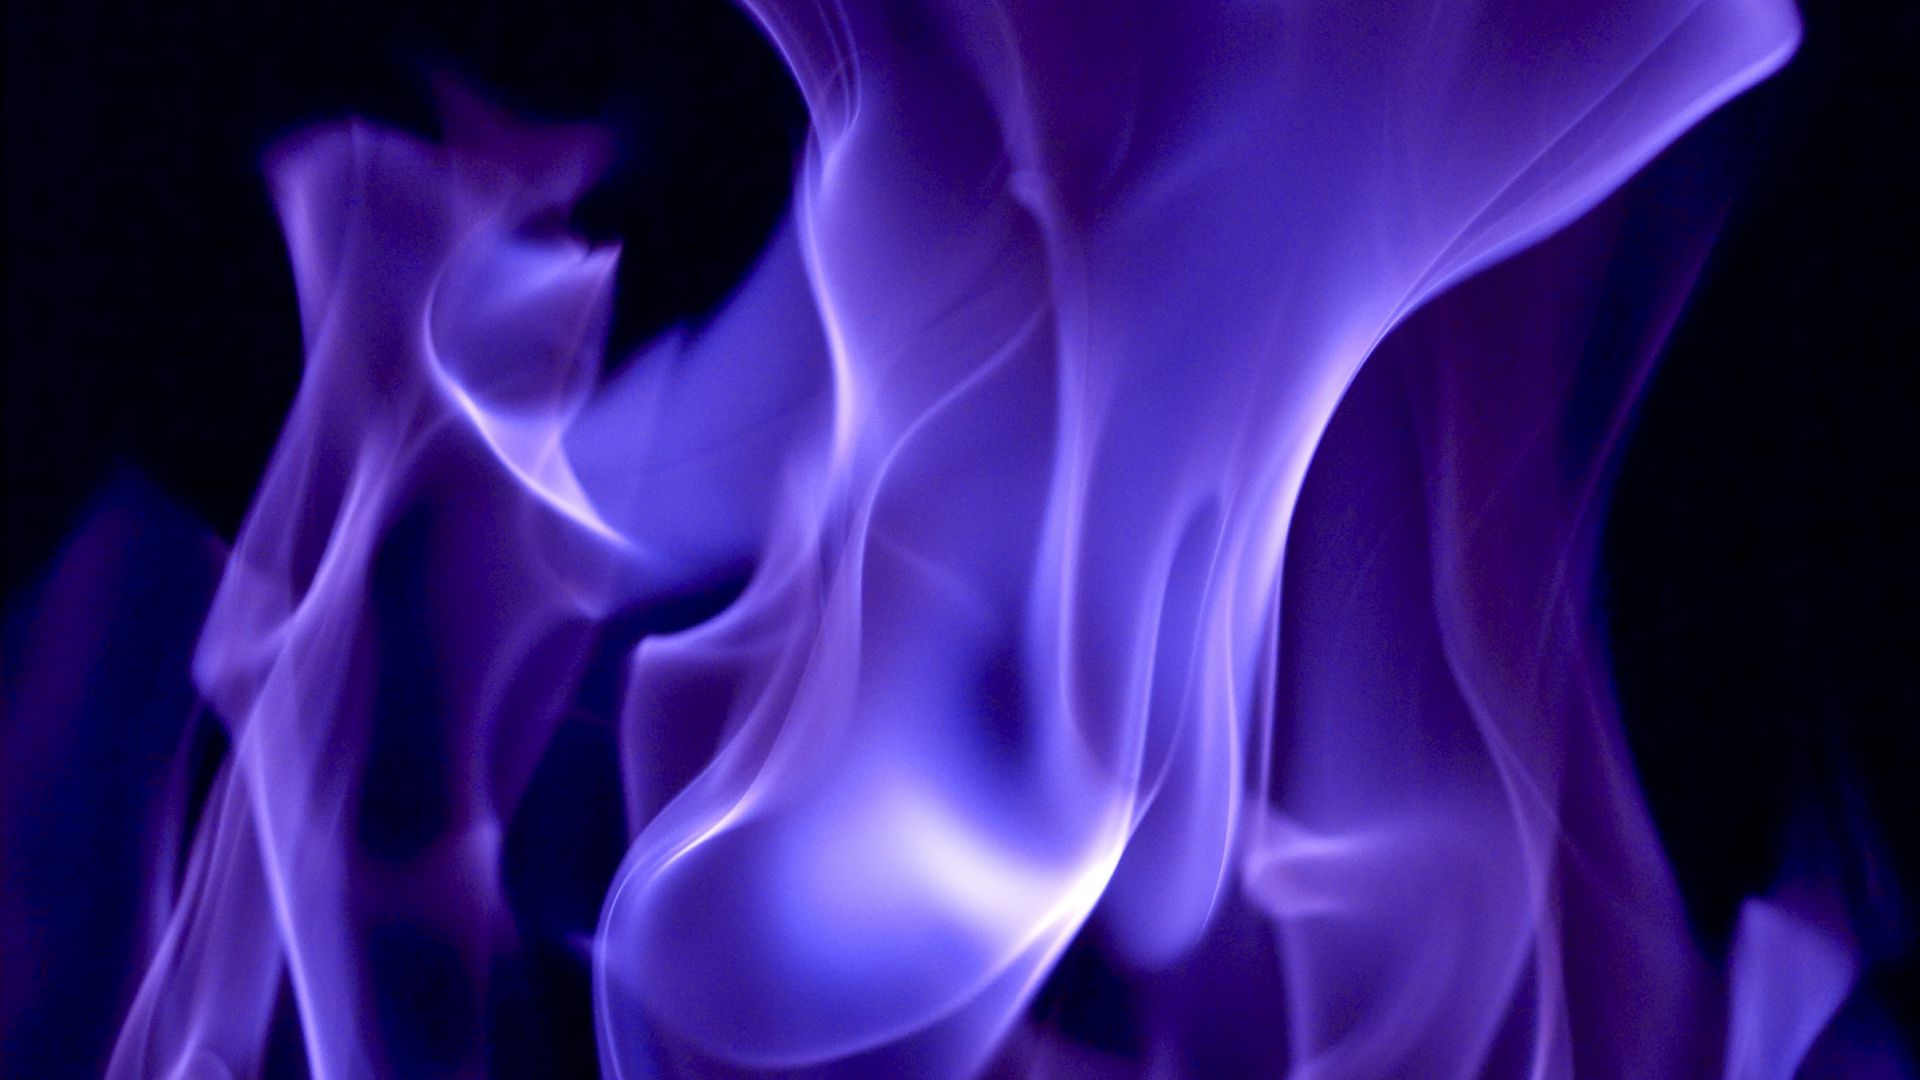 Download wallpaper 1920x1080 smoke, fire, color, purple full hd, hdtv, fhd,  1080p hd background